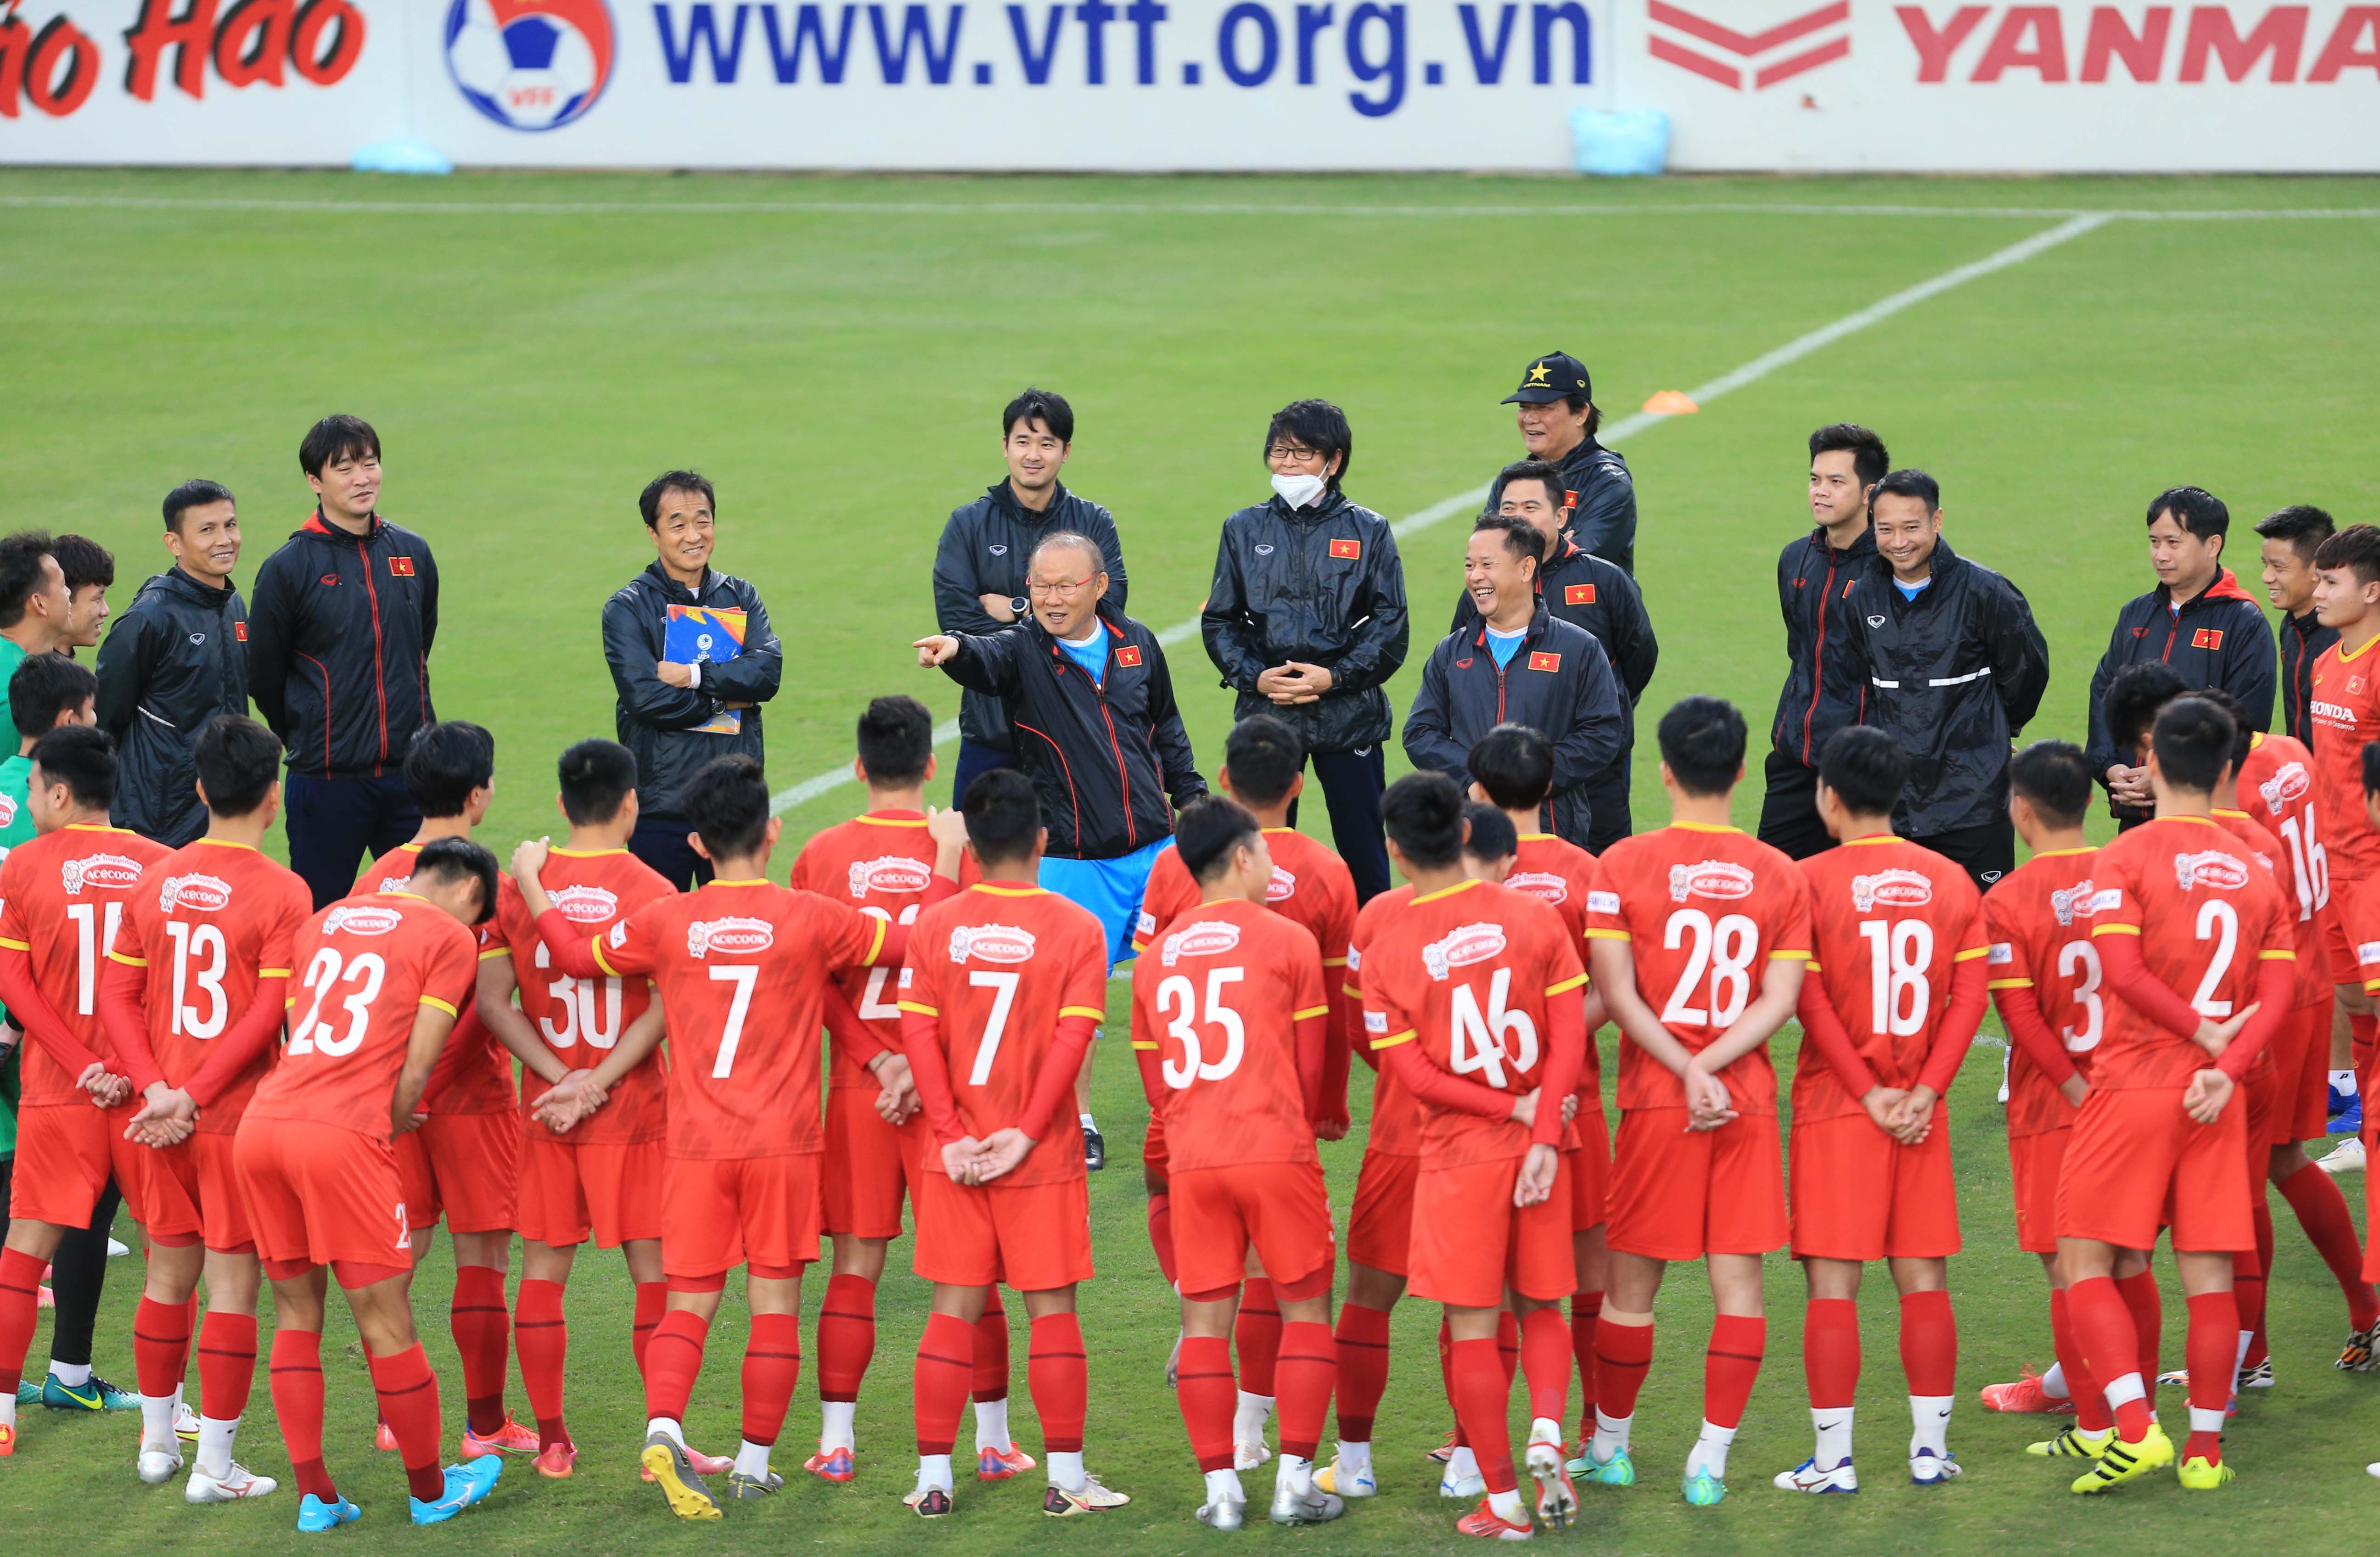 Vietnam invite Singapore, India to Ho Chi Minh City for friendly tournament next month